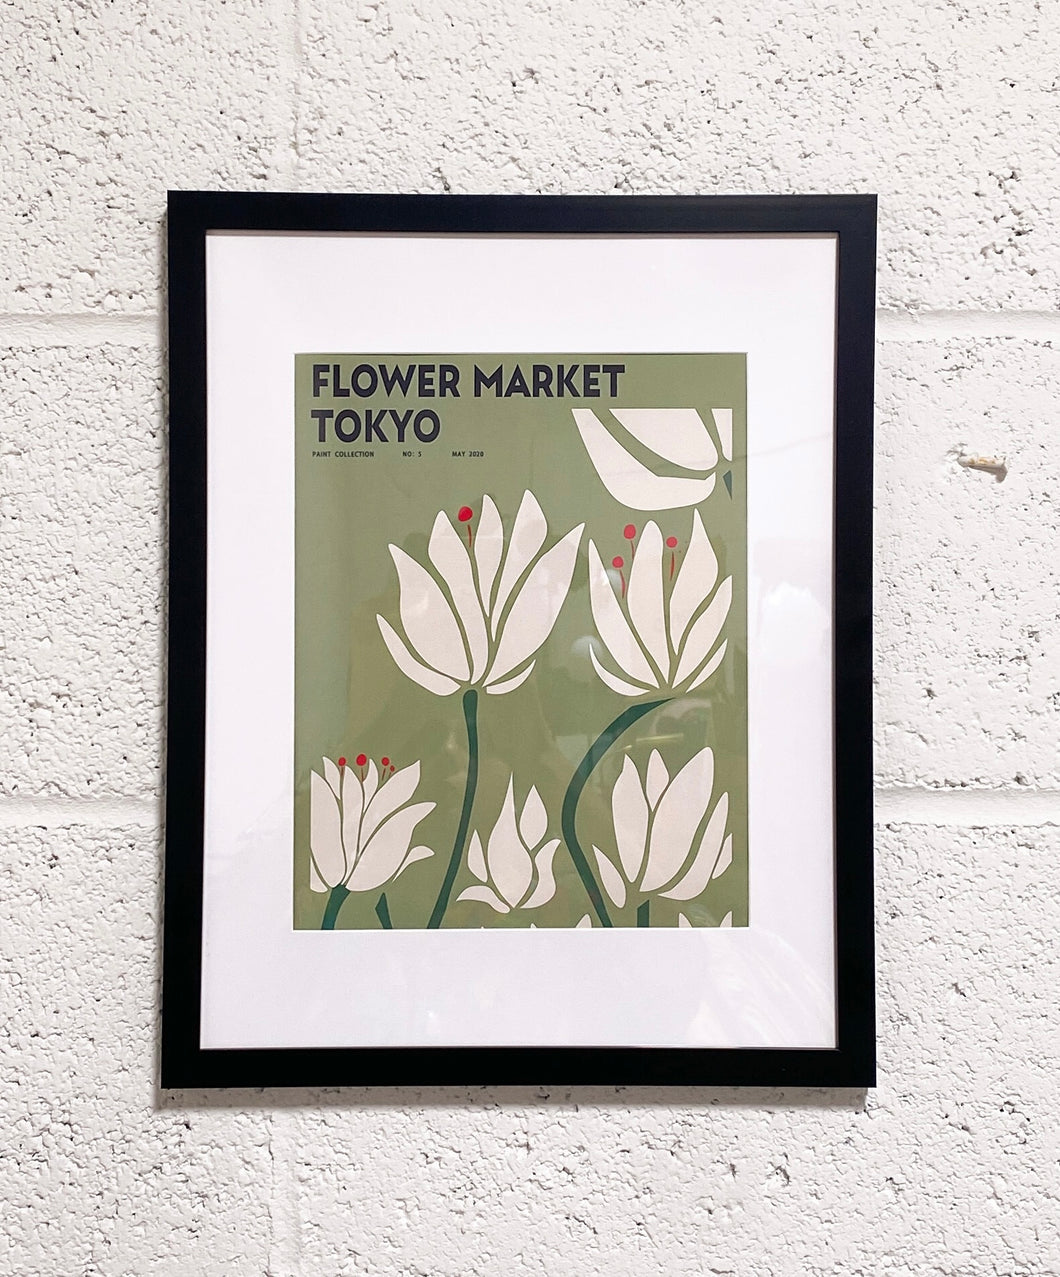 Flower Market Tokyo in Black Frame